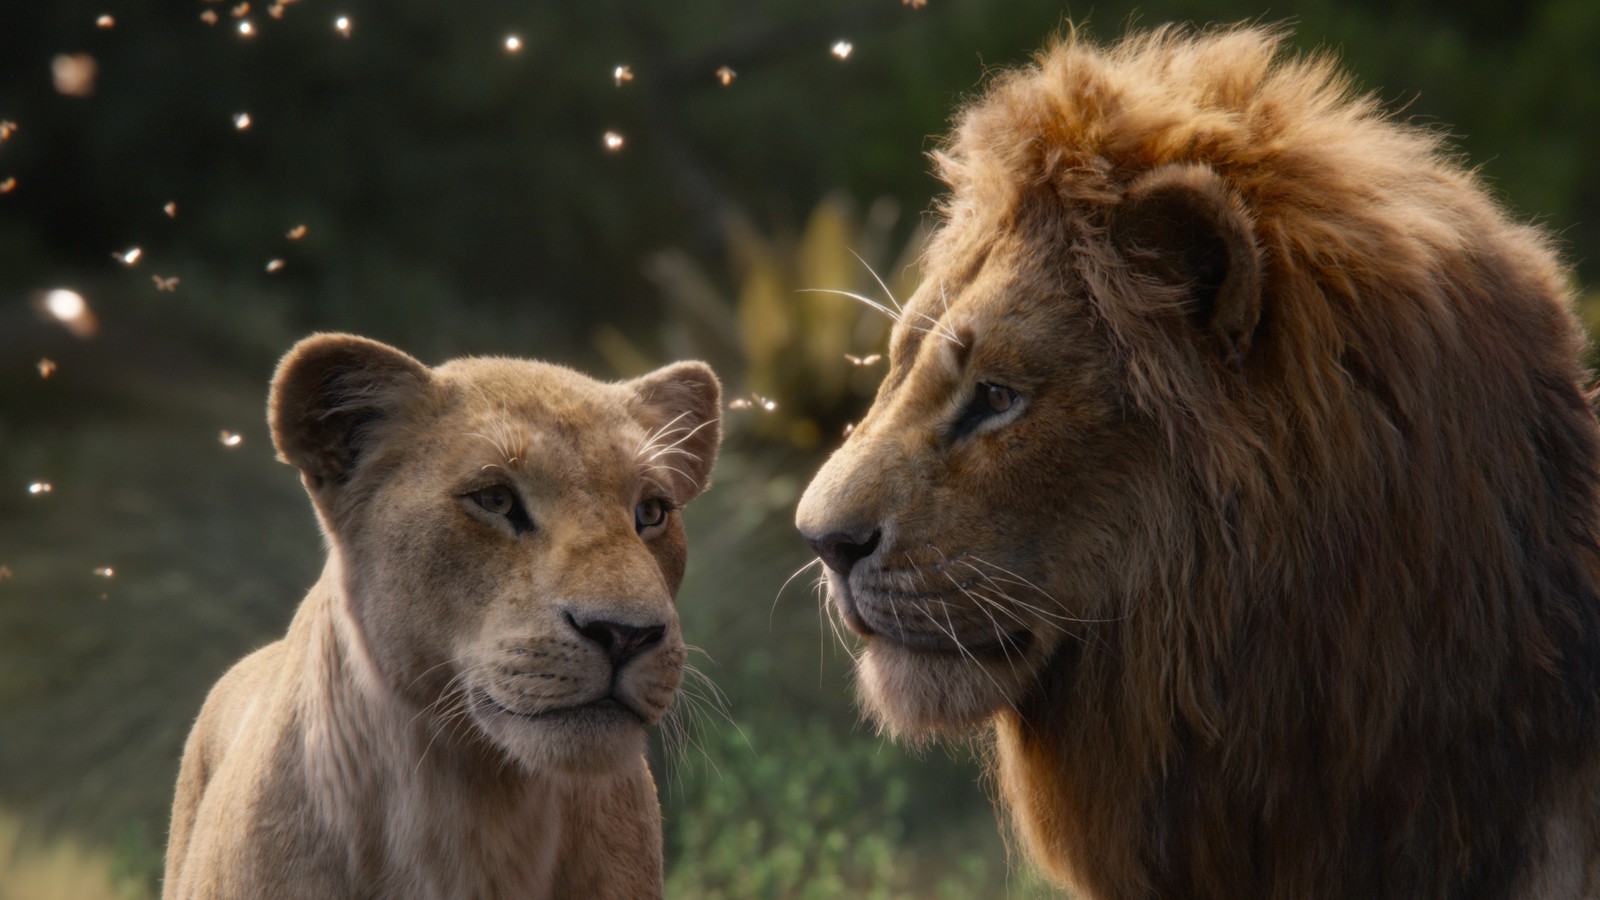 the live-action 'lion king': disney's uncanny remake - the atlantic